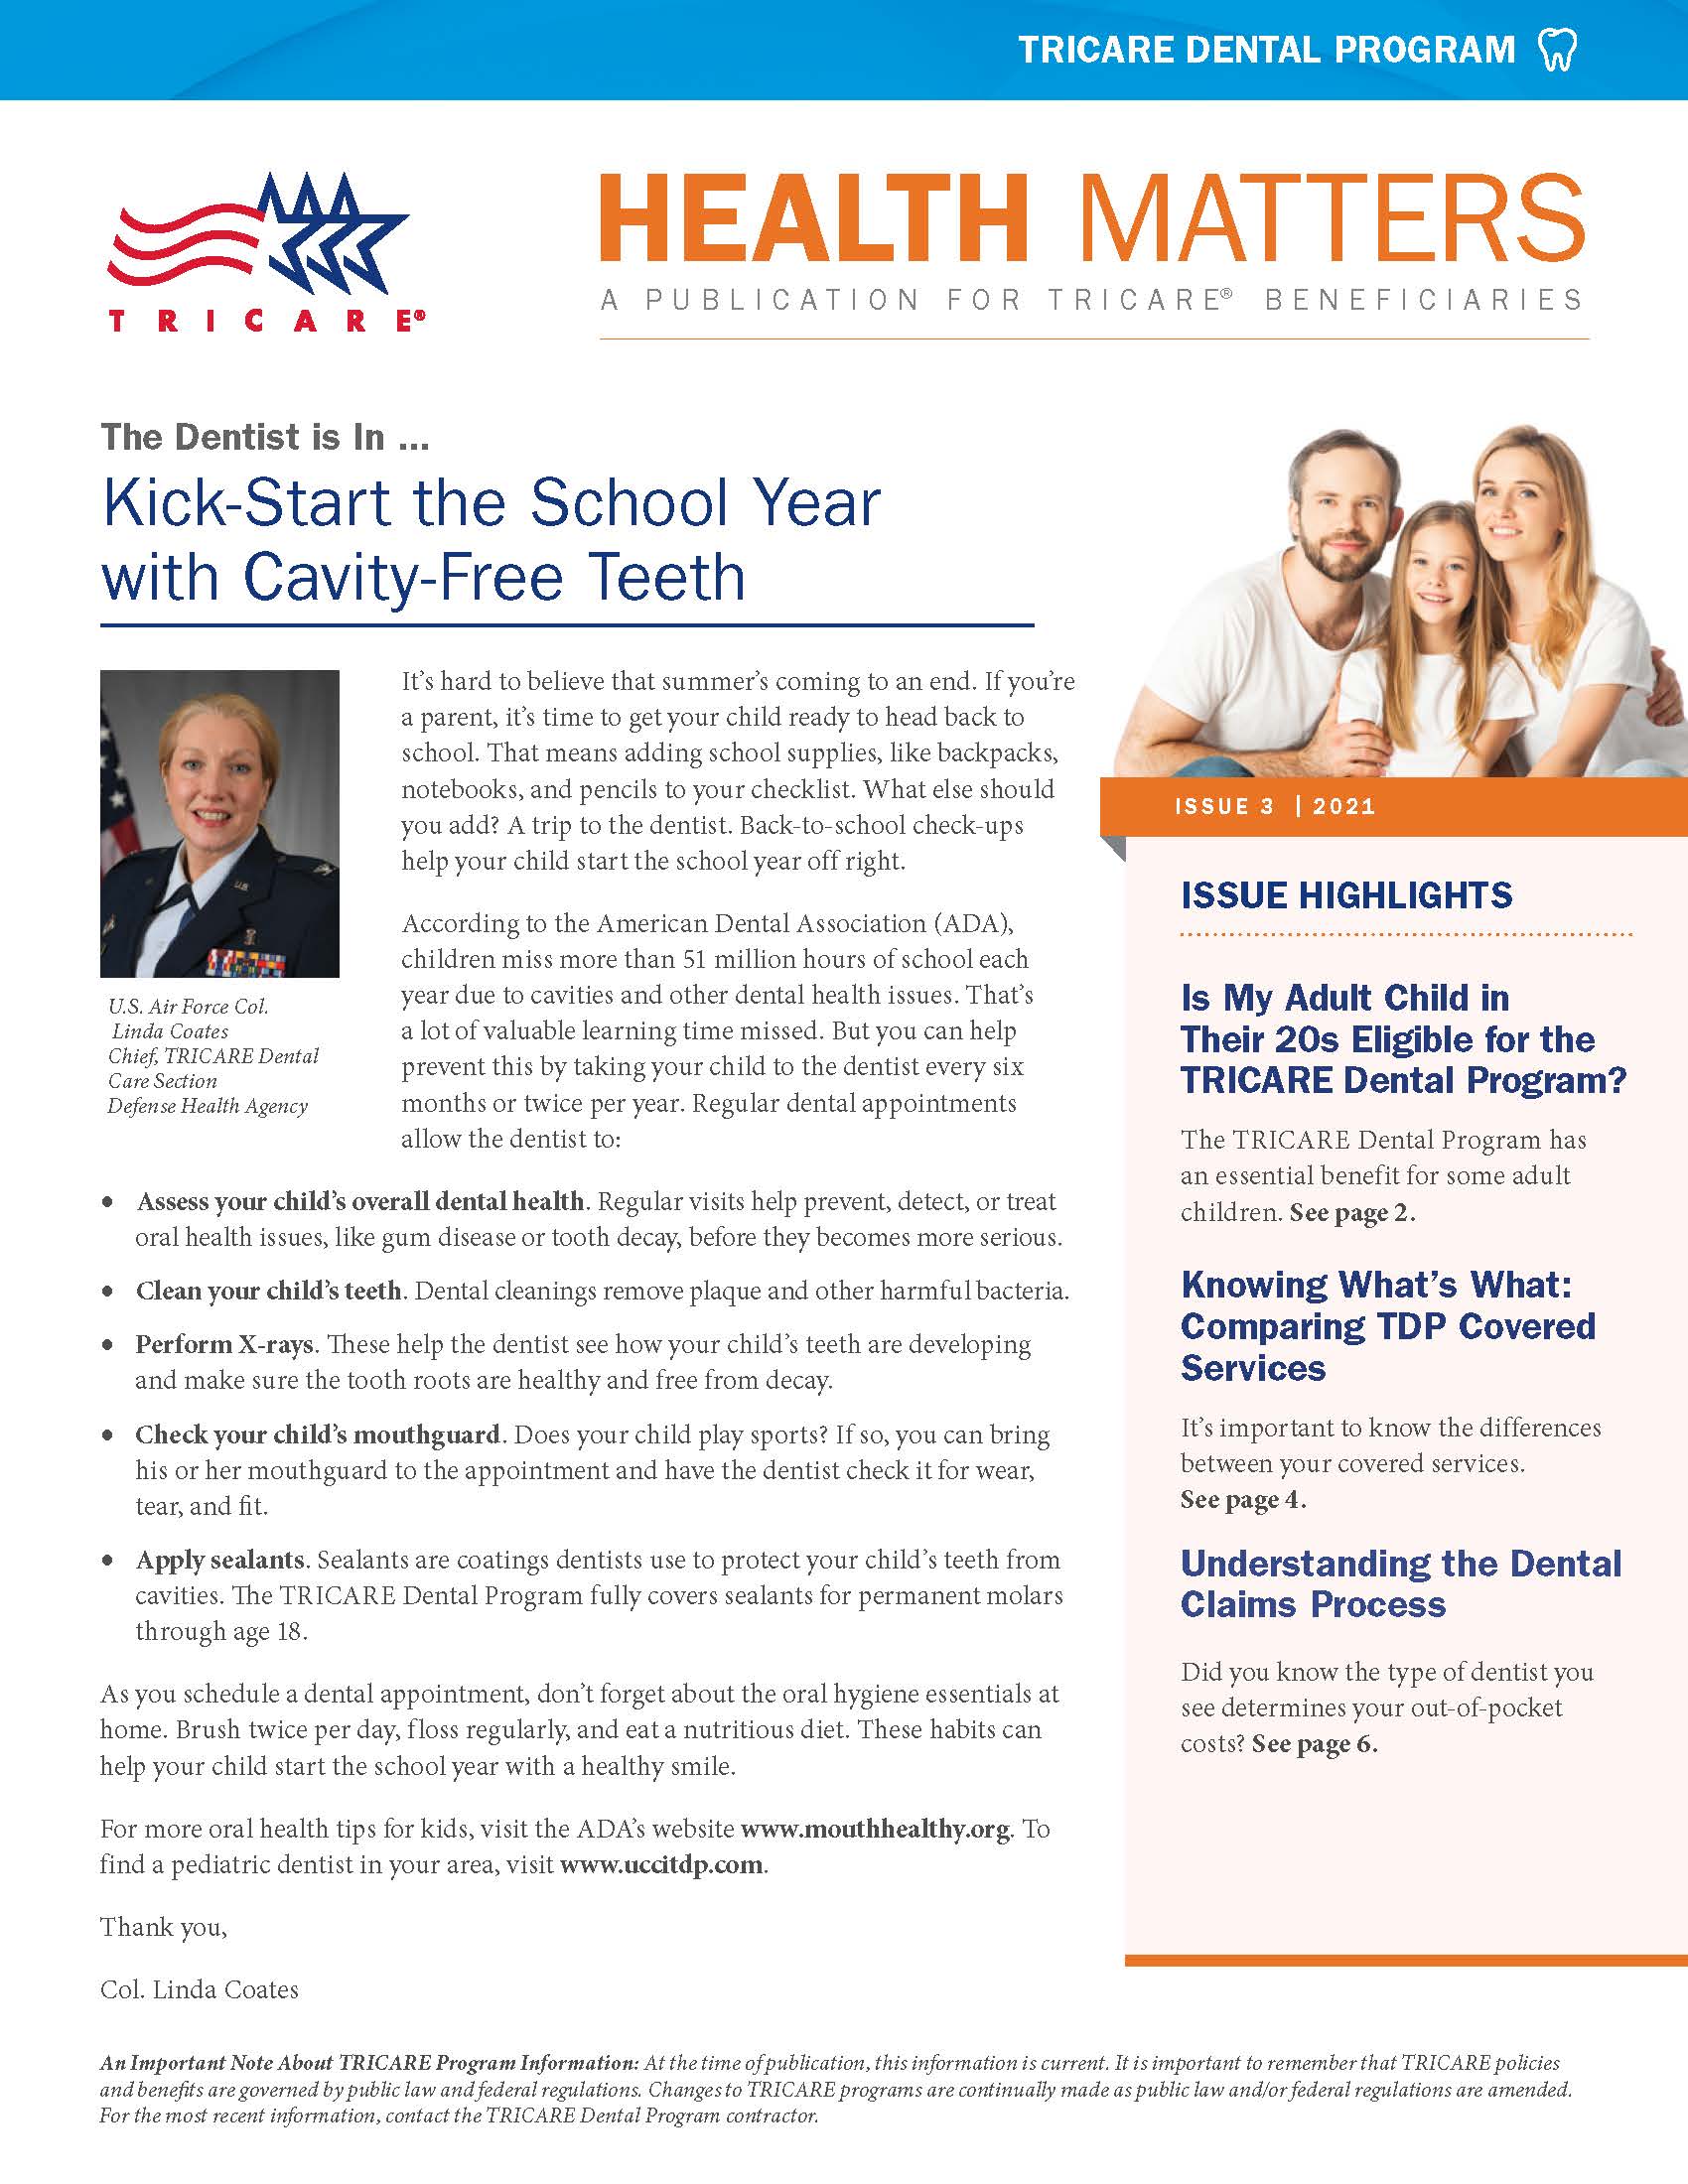 Kick-Start the School Year with Cavity-Free Teeth